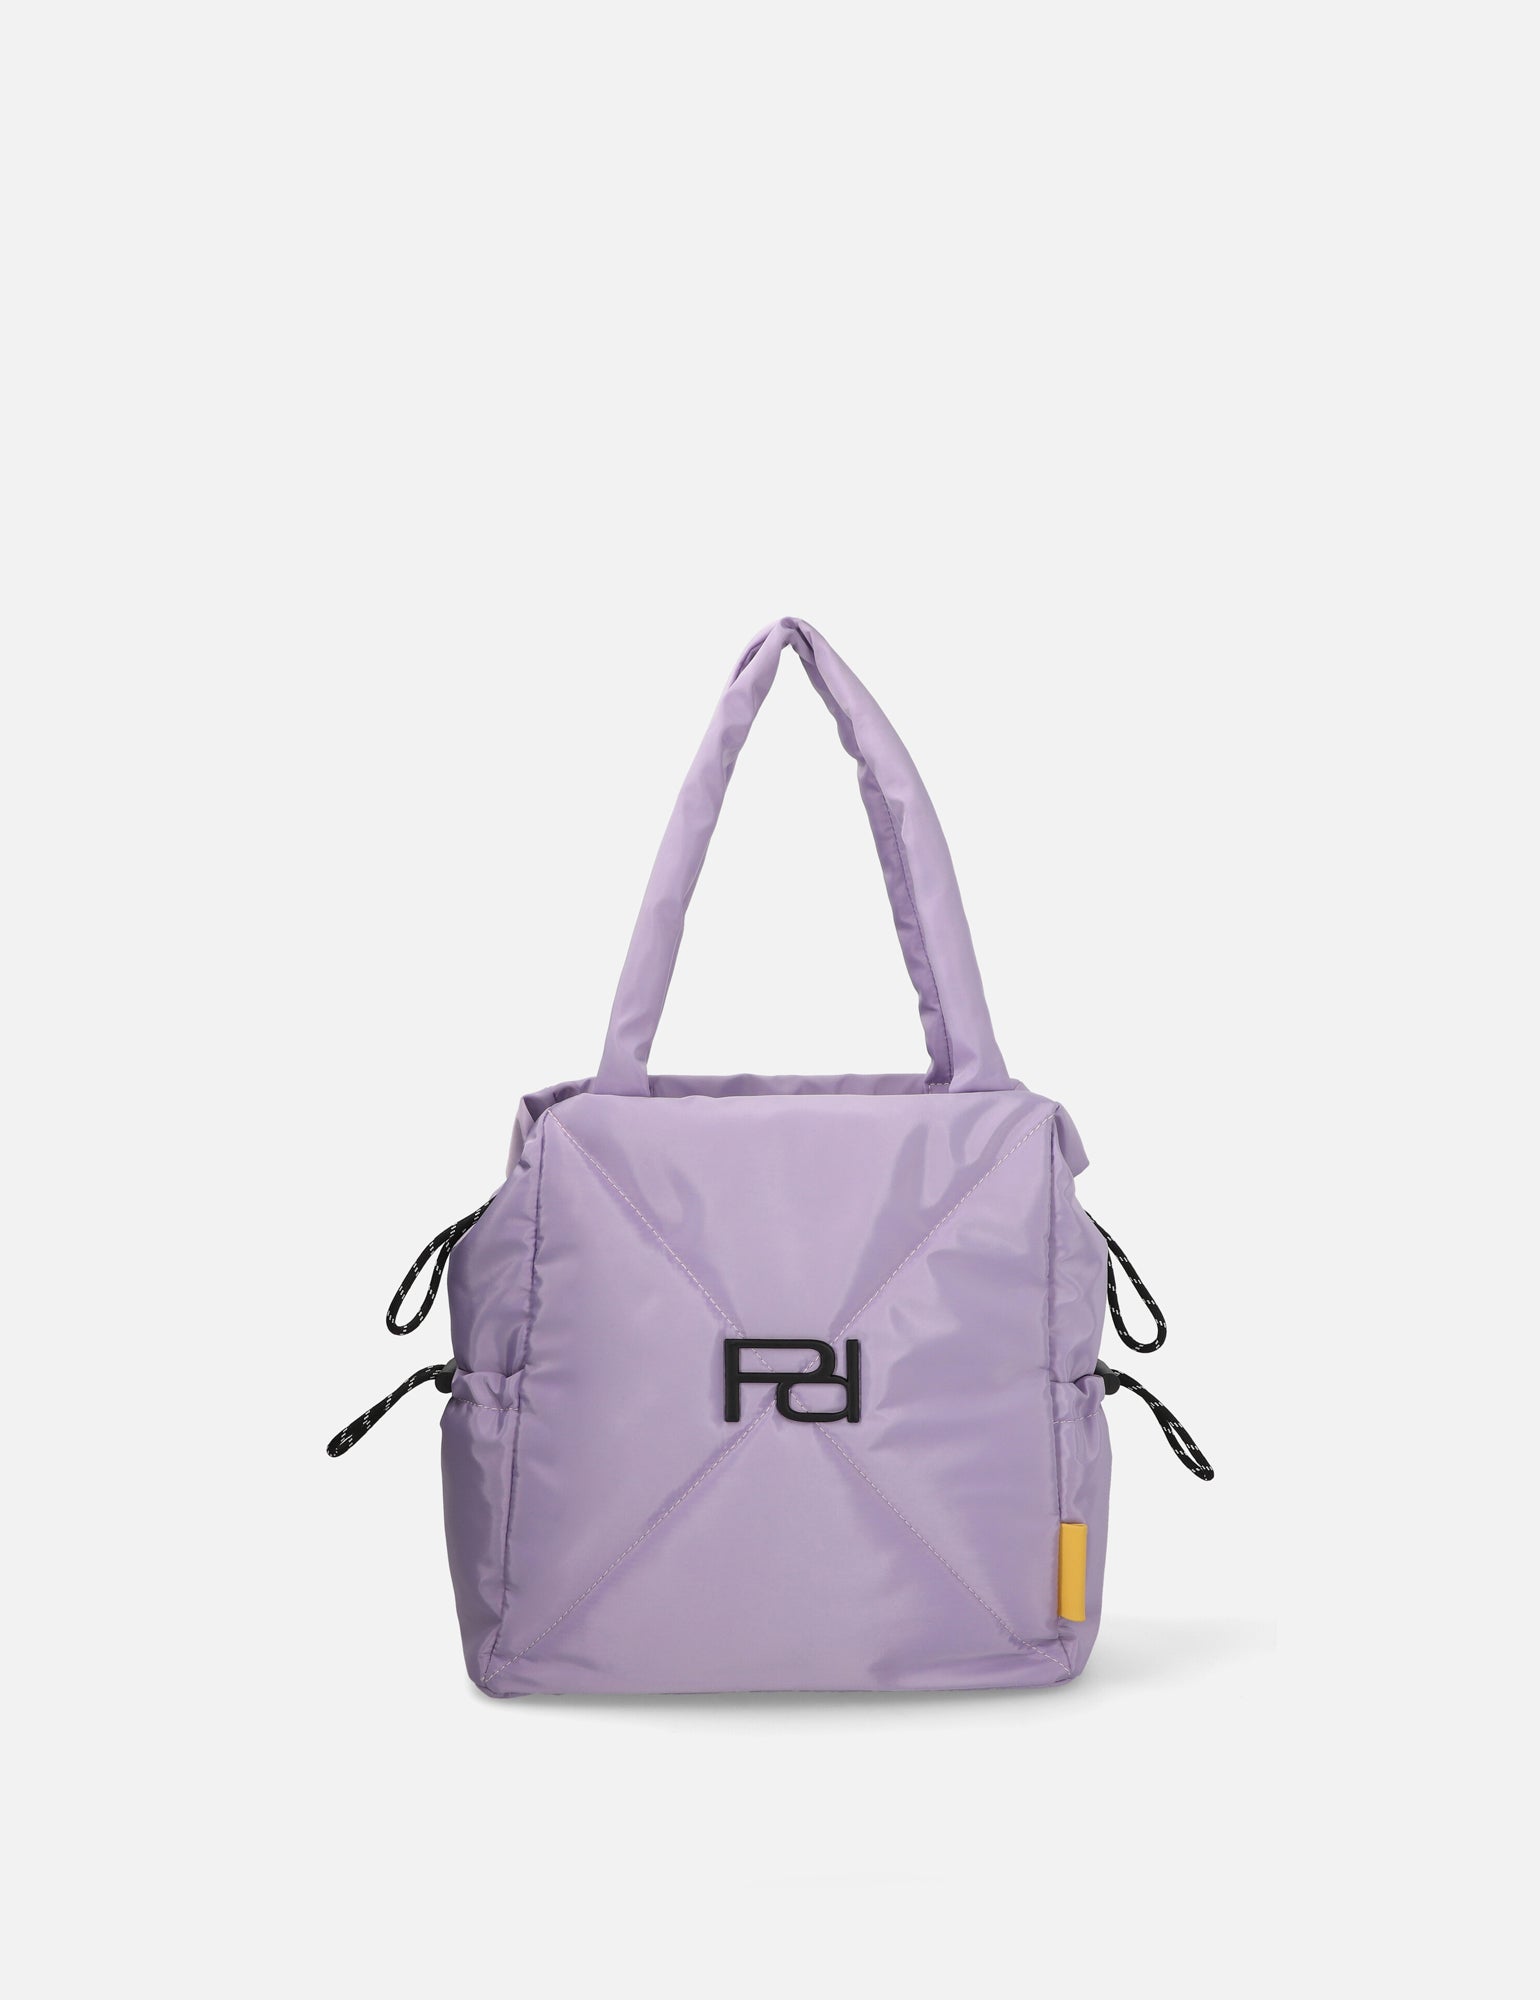 Shoping bag en nylon capitonado color lila